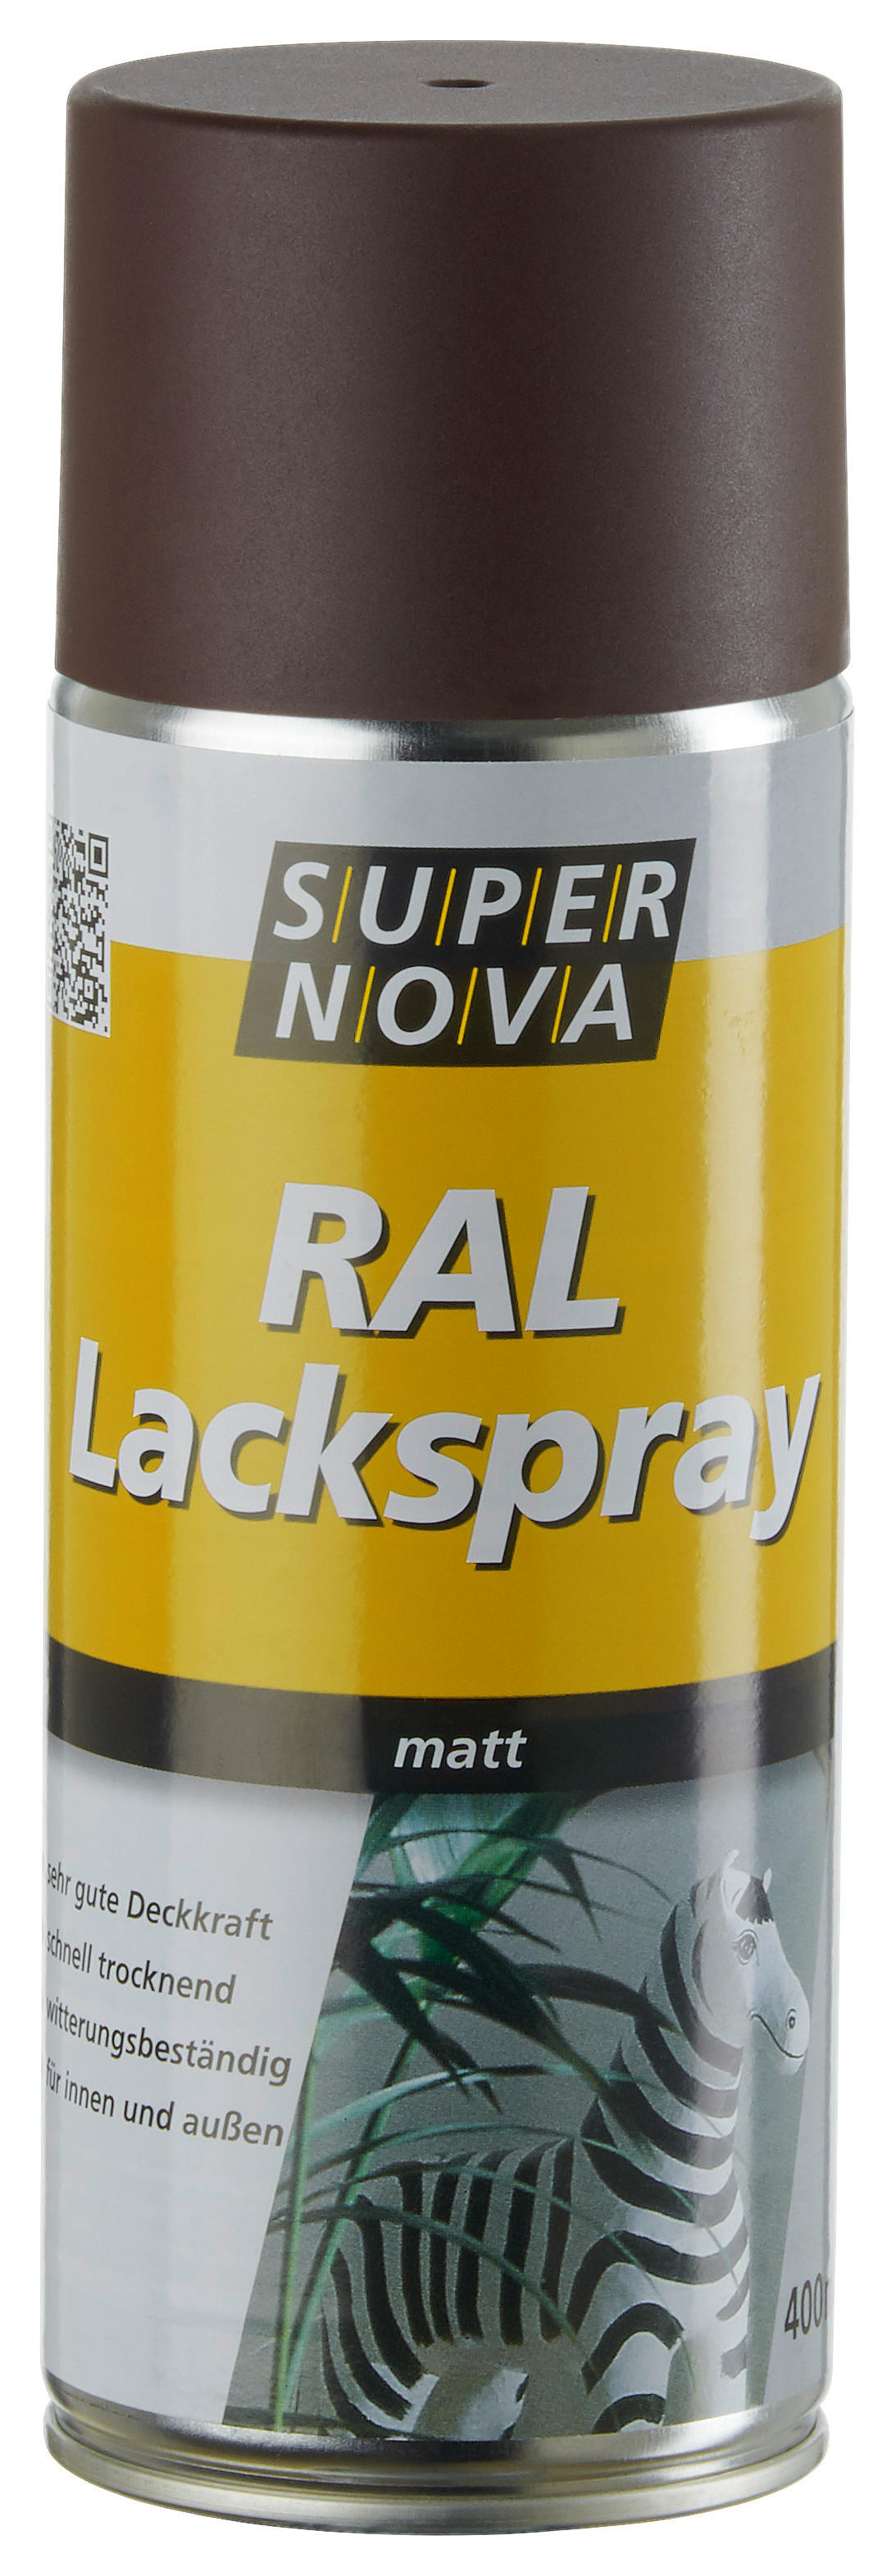 Super-Nova Lackspray schokobraun matt ca. 0,4 l Lackspray 400ml - schokobraun (400ml)